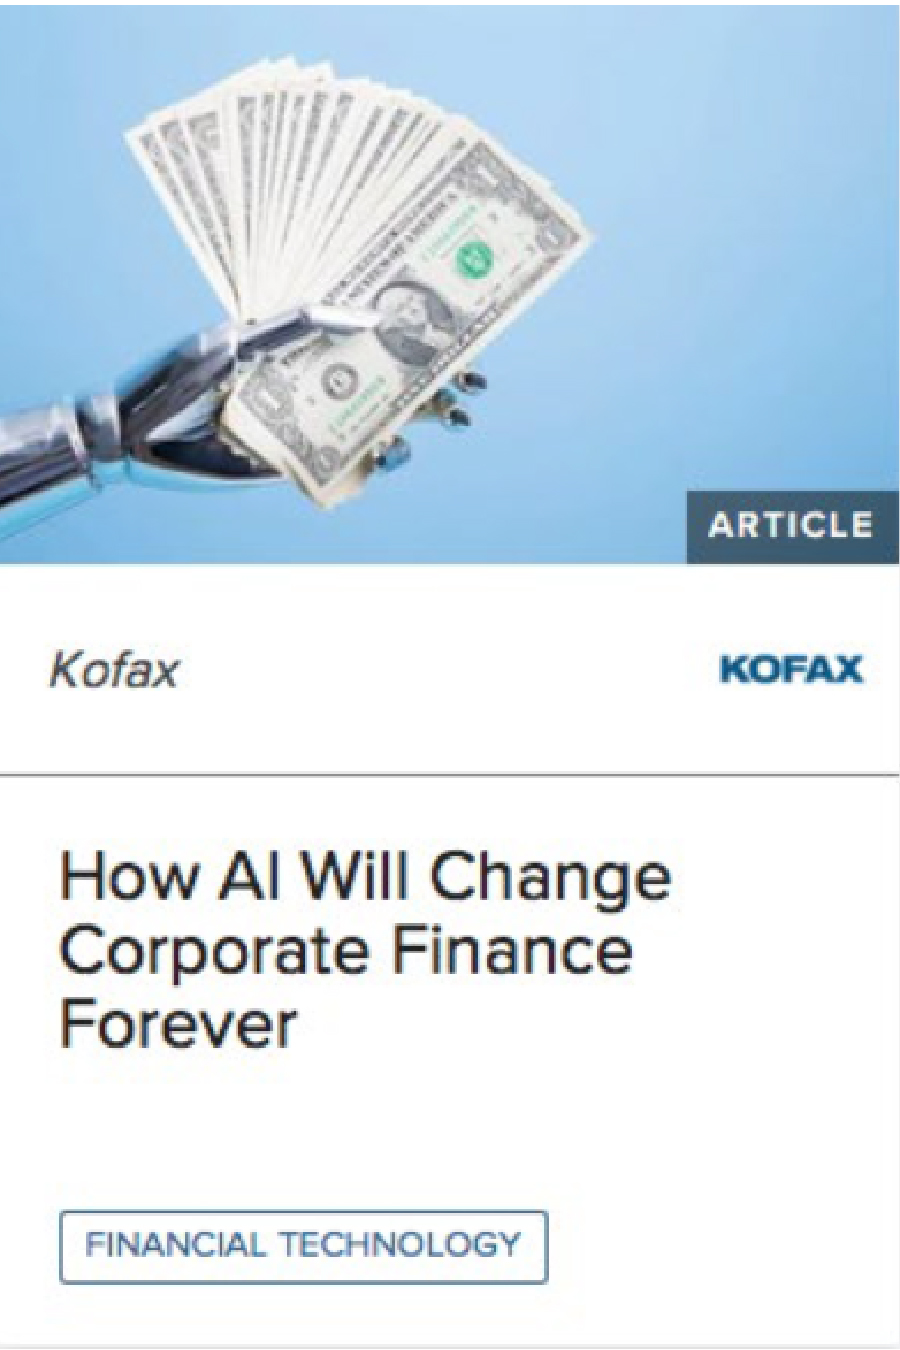 Kofax IFP